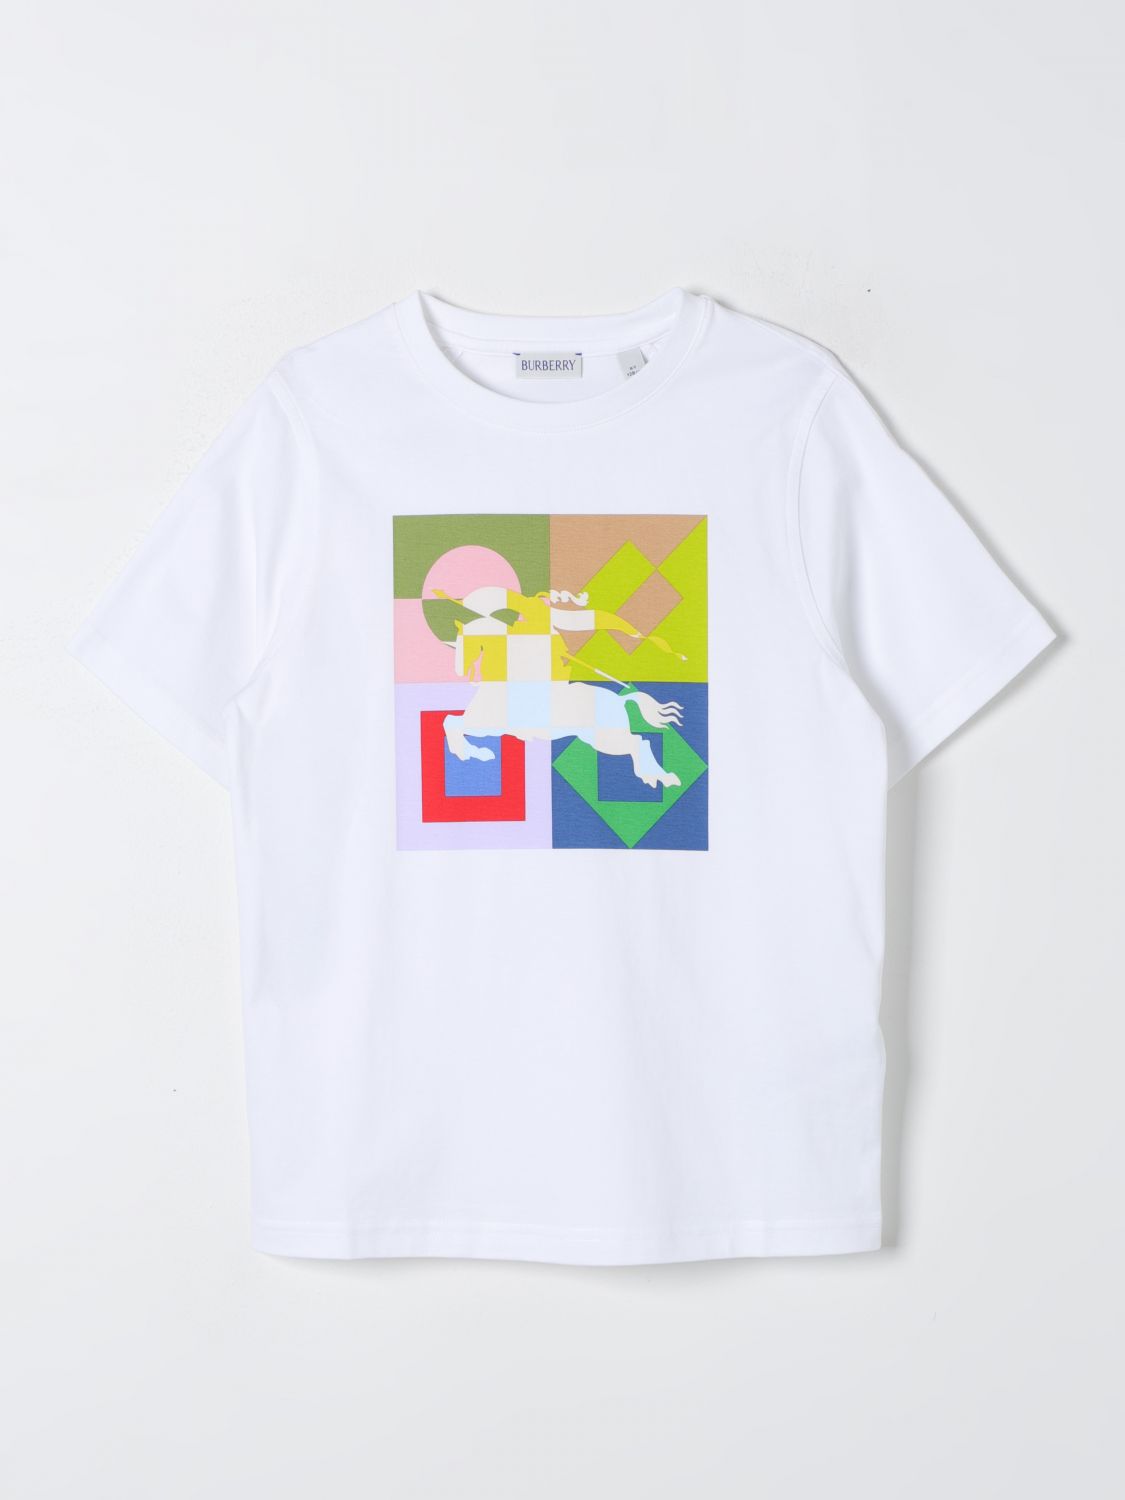 Shop Burberry T-shirt  Kids Kids Color White